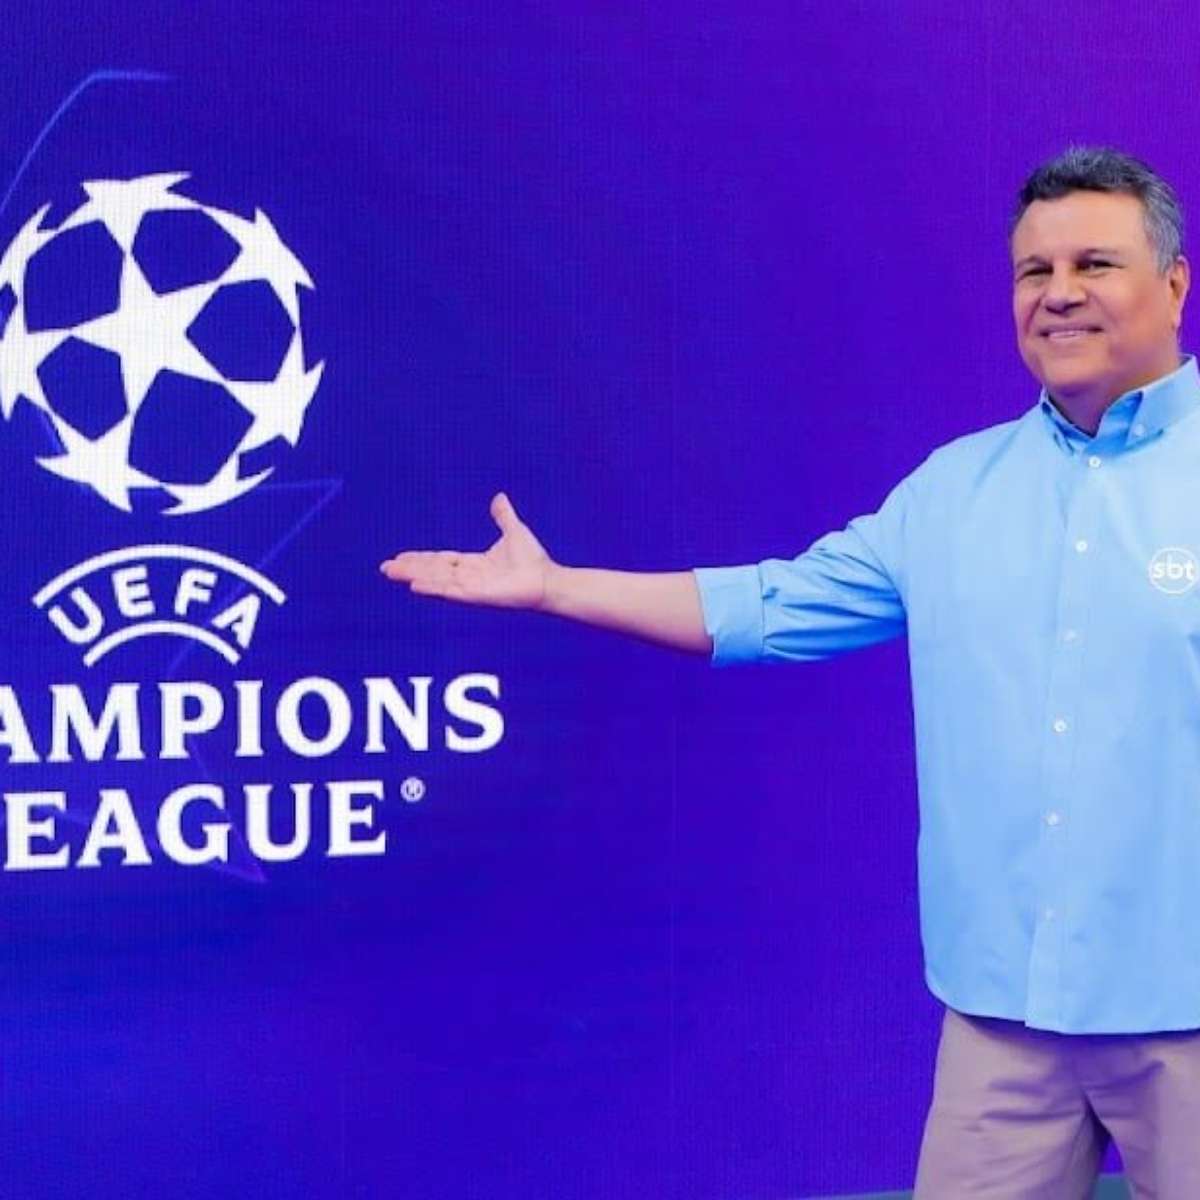 Champions League: SBT oficializa transmissão até 2024 na TV aberta